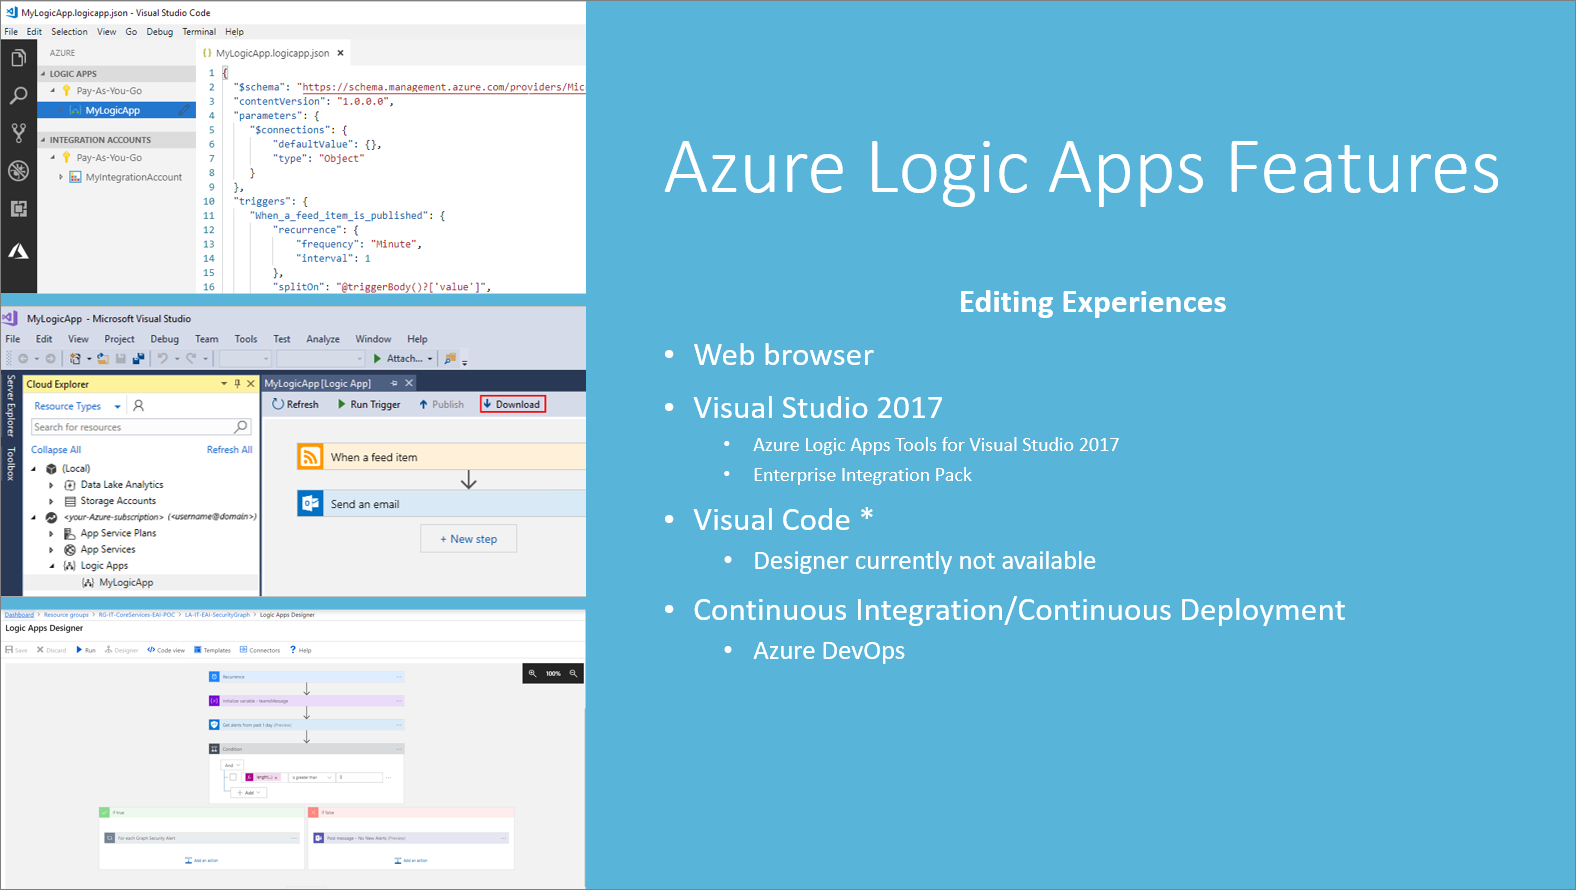 Azure Logic Apps Features